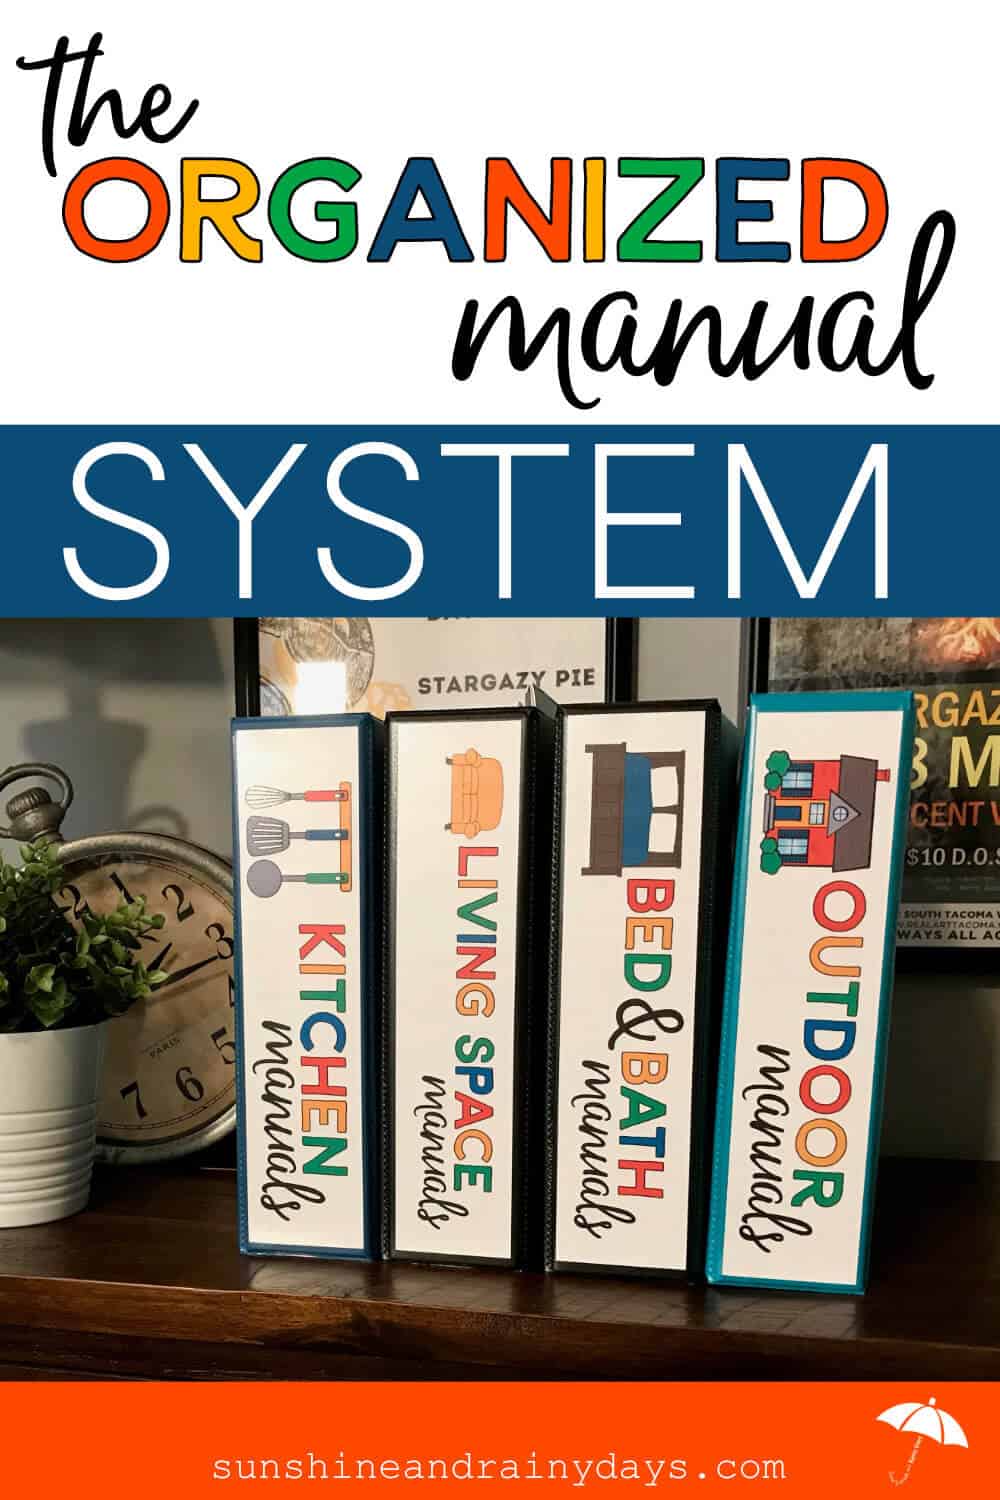 Organized Manual System